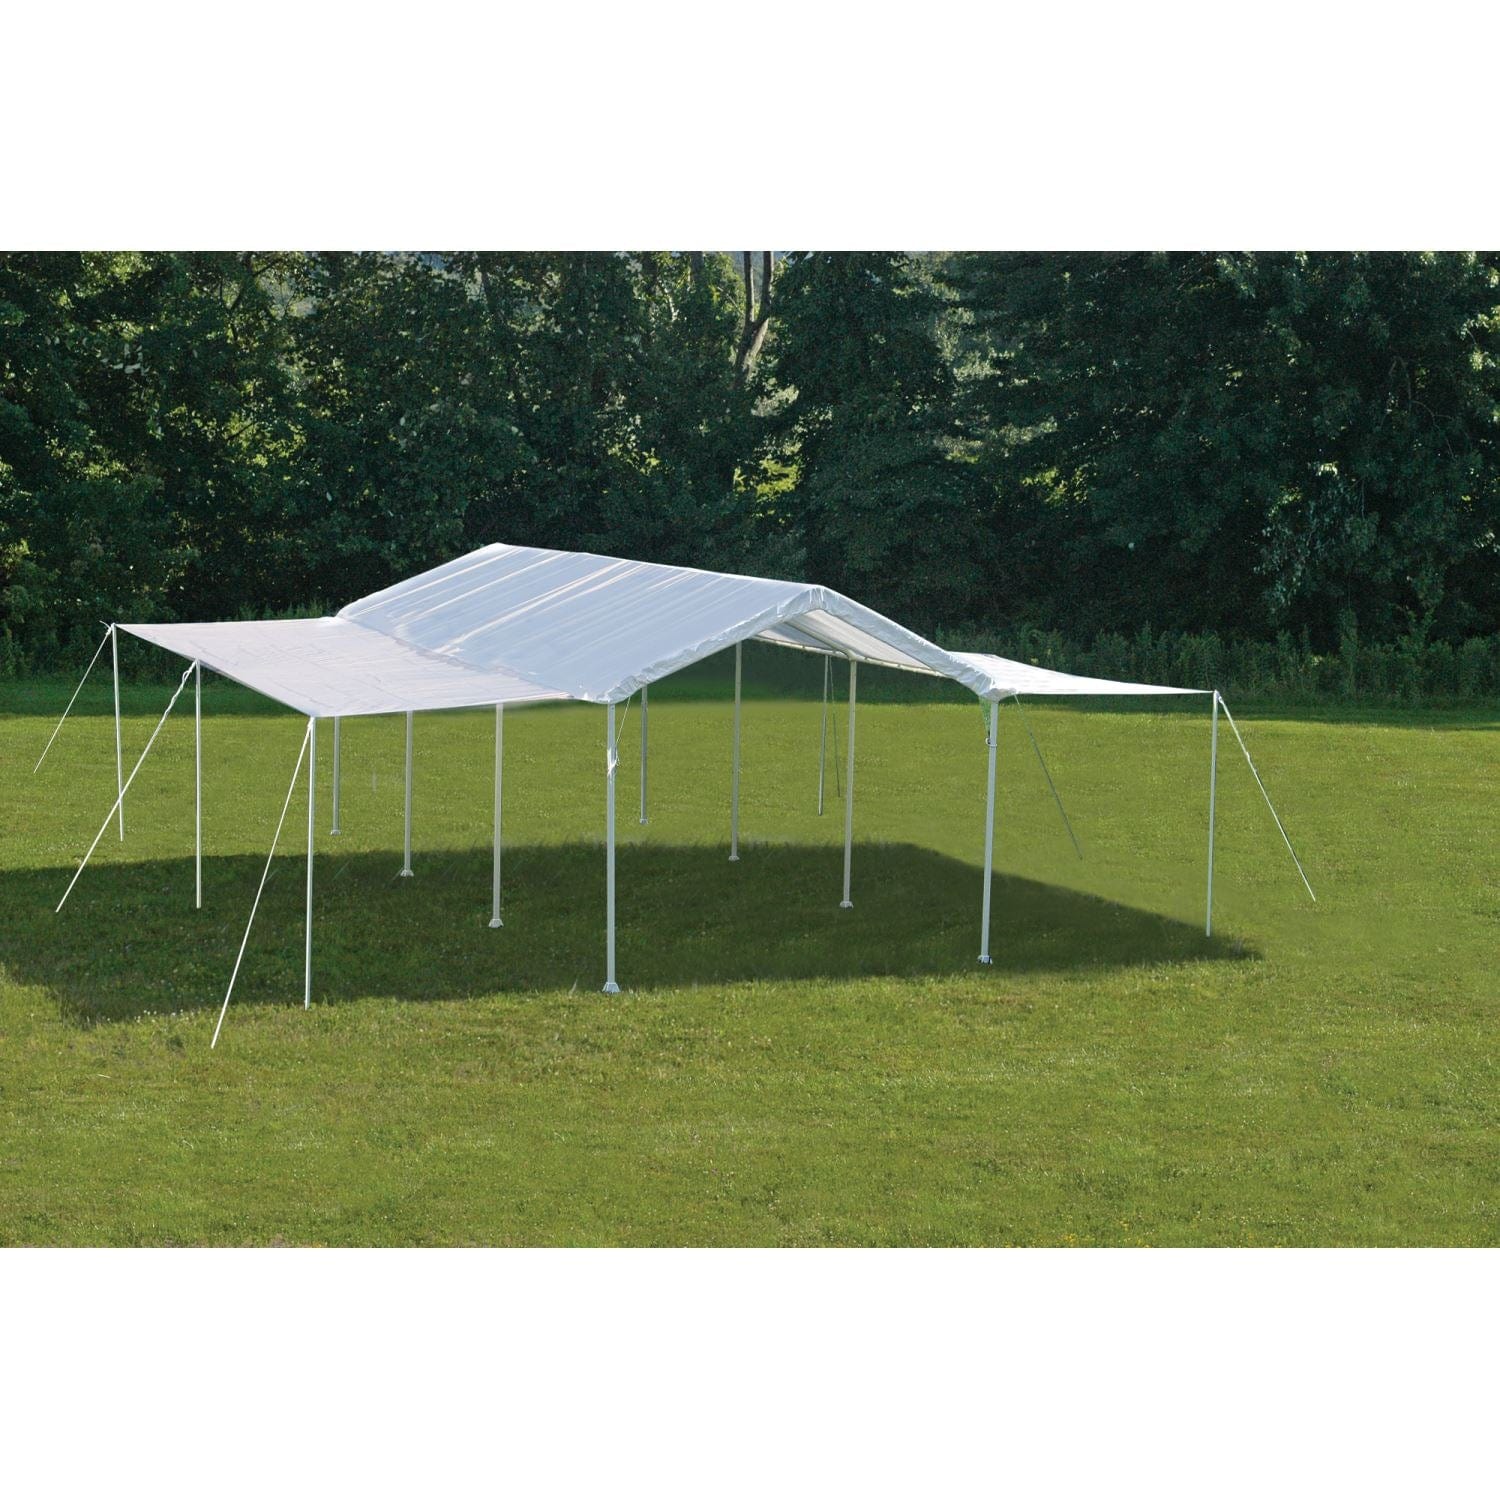 ShelterLogic Canopy Enclosure Kit ShelterLogic | MaxAP 10 ft. x 20 ft. White Canopy Extension Kit - Frame and Canopy Sold Separately 25730